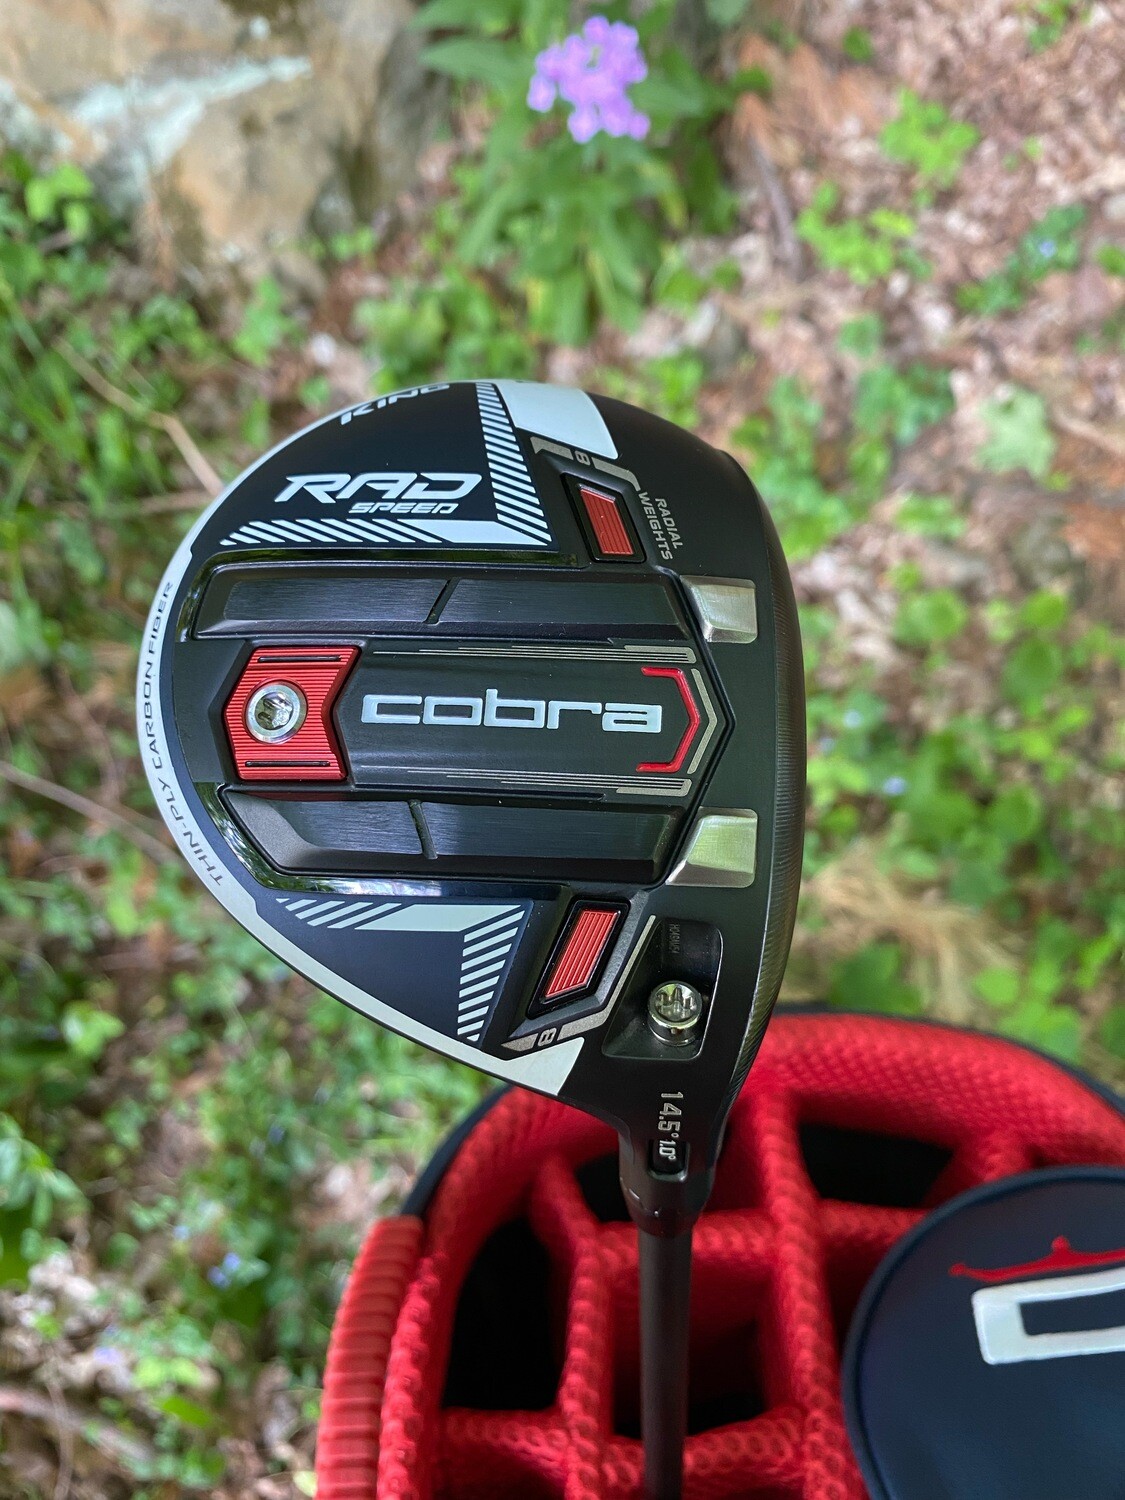 Cobra Radspeed 3 wood